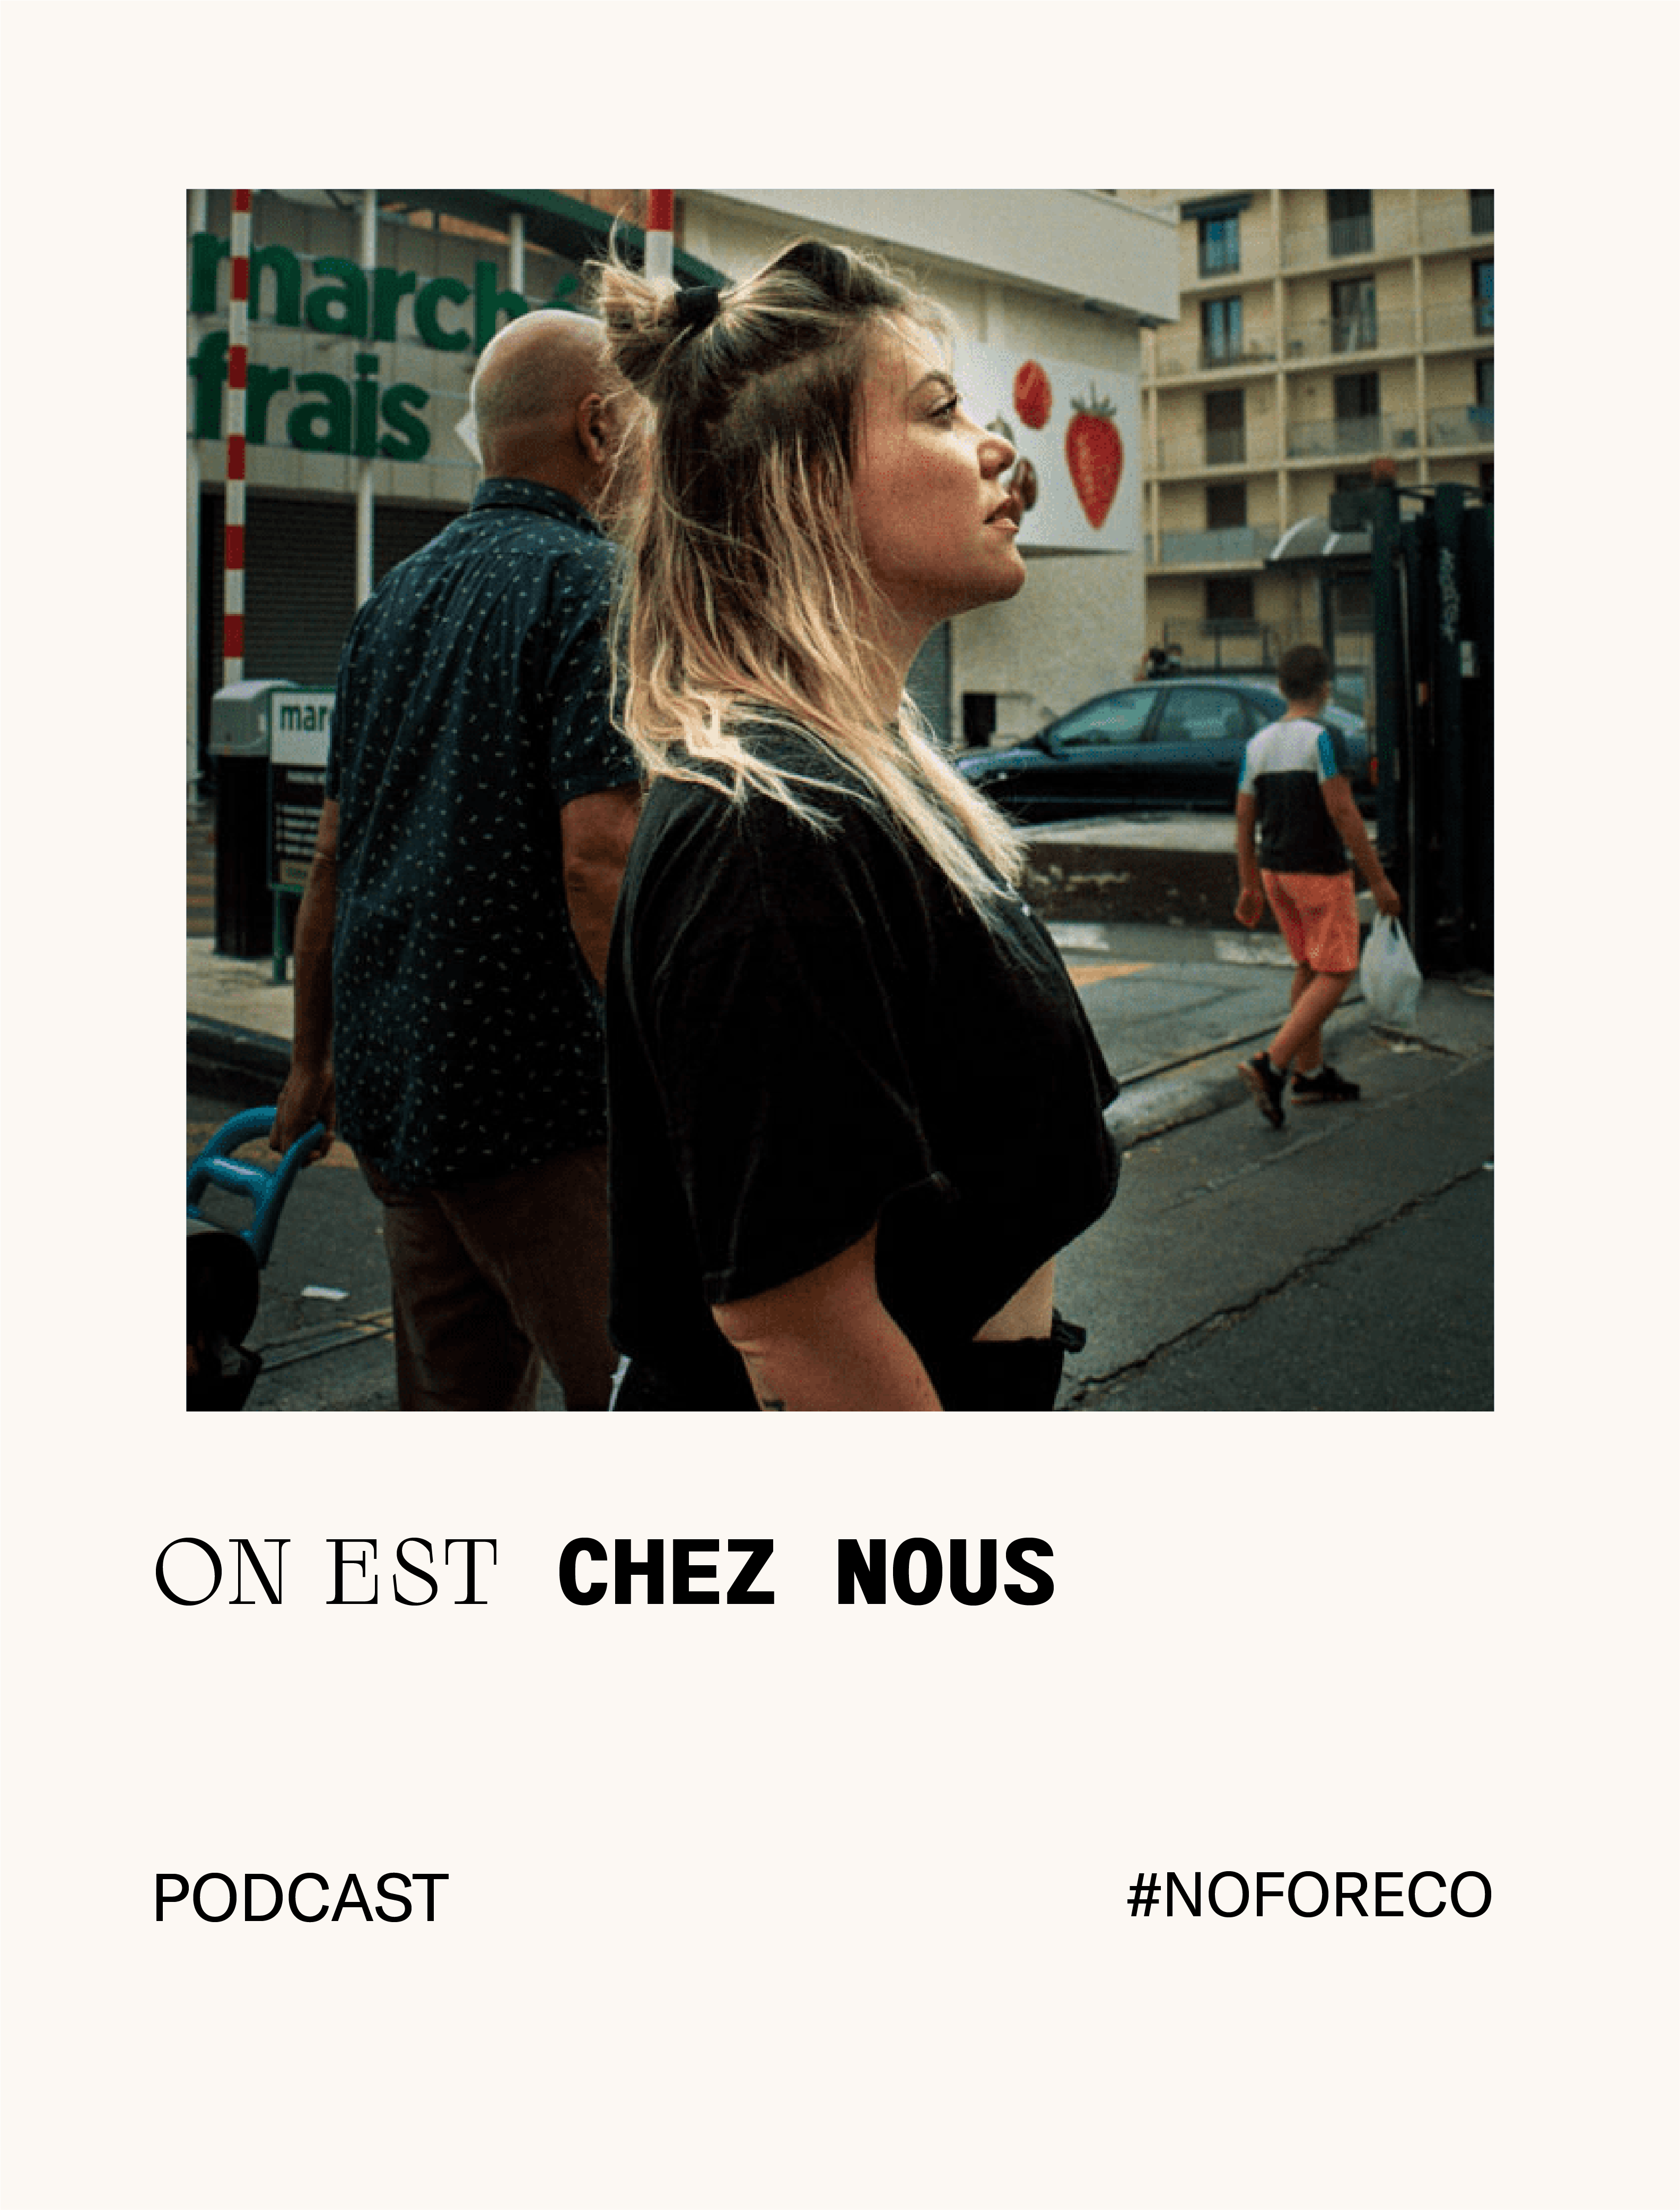 femme_jeune_rue_ville_podcast